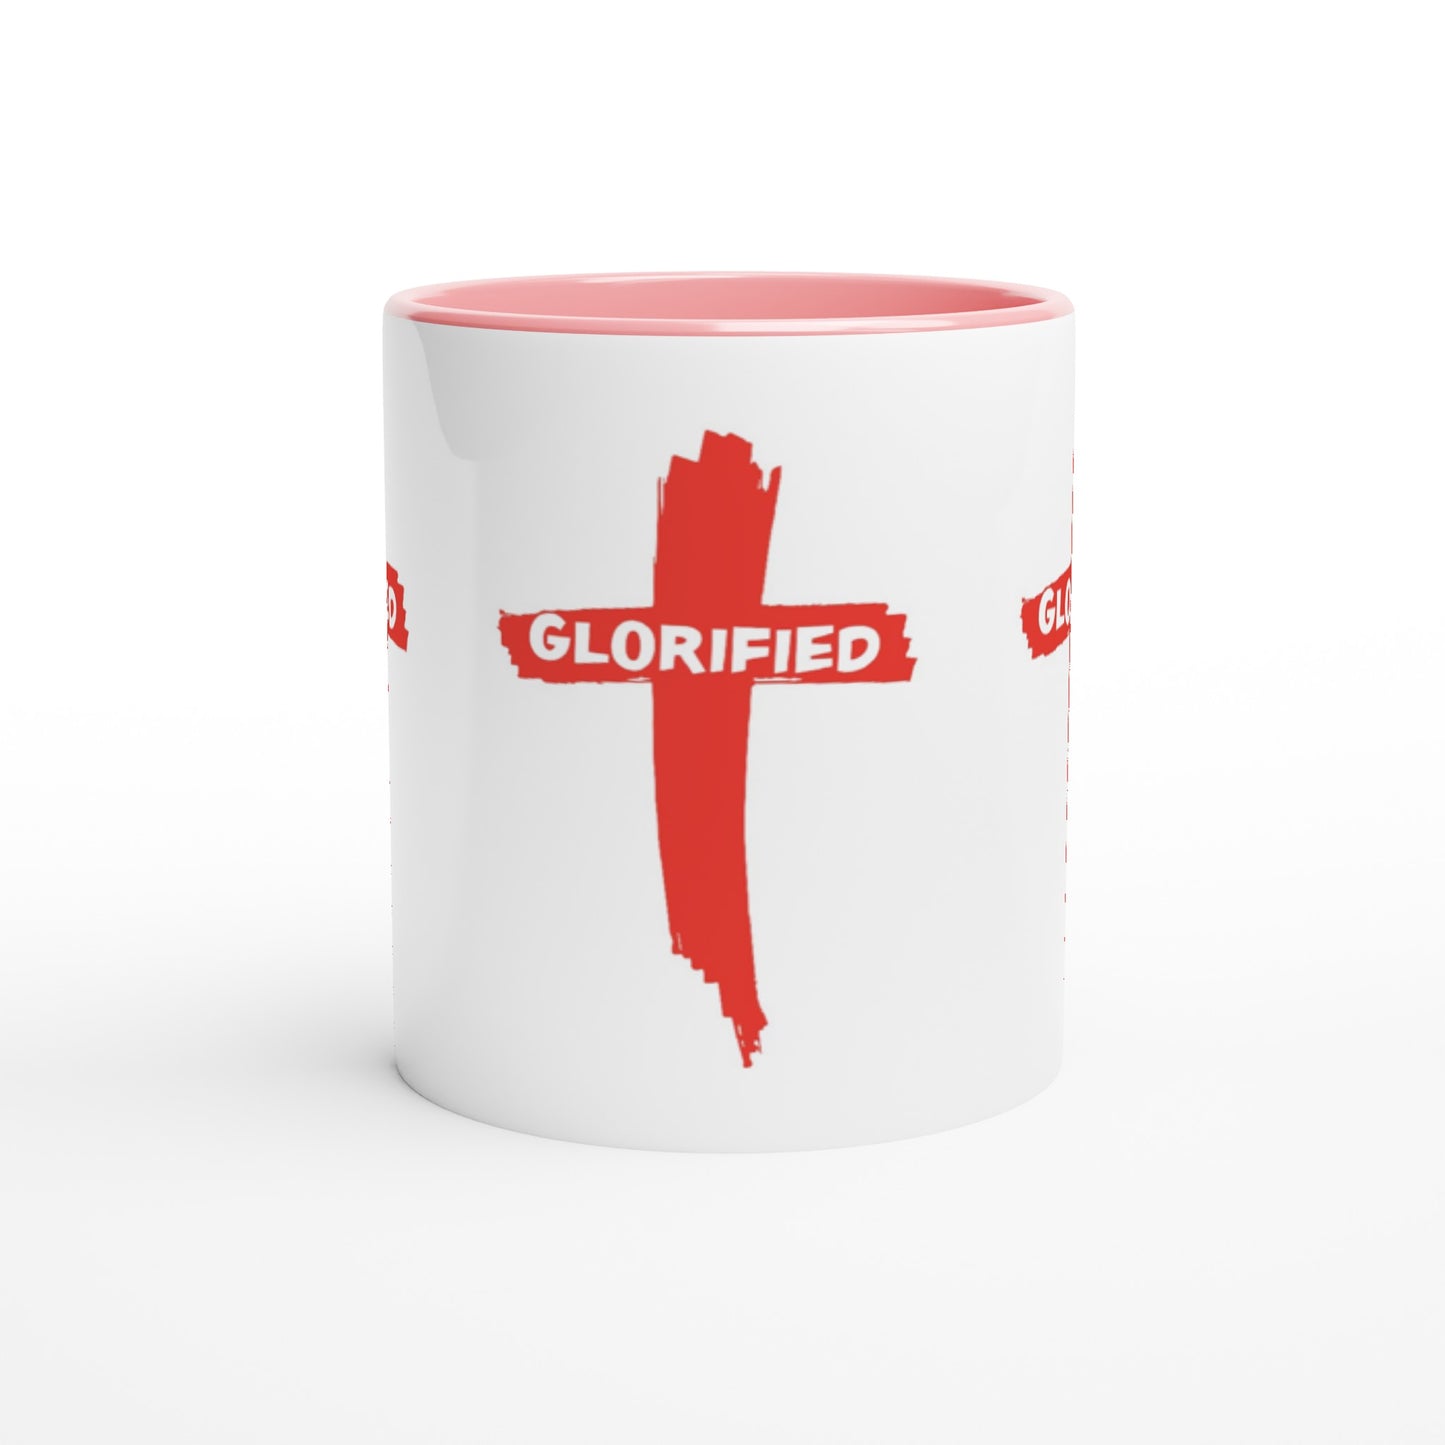 GLORIFIED Mug from Cross Series